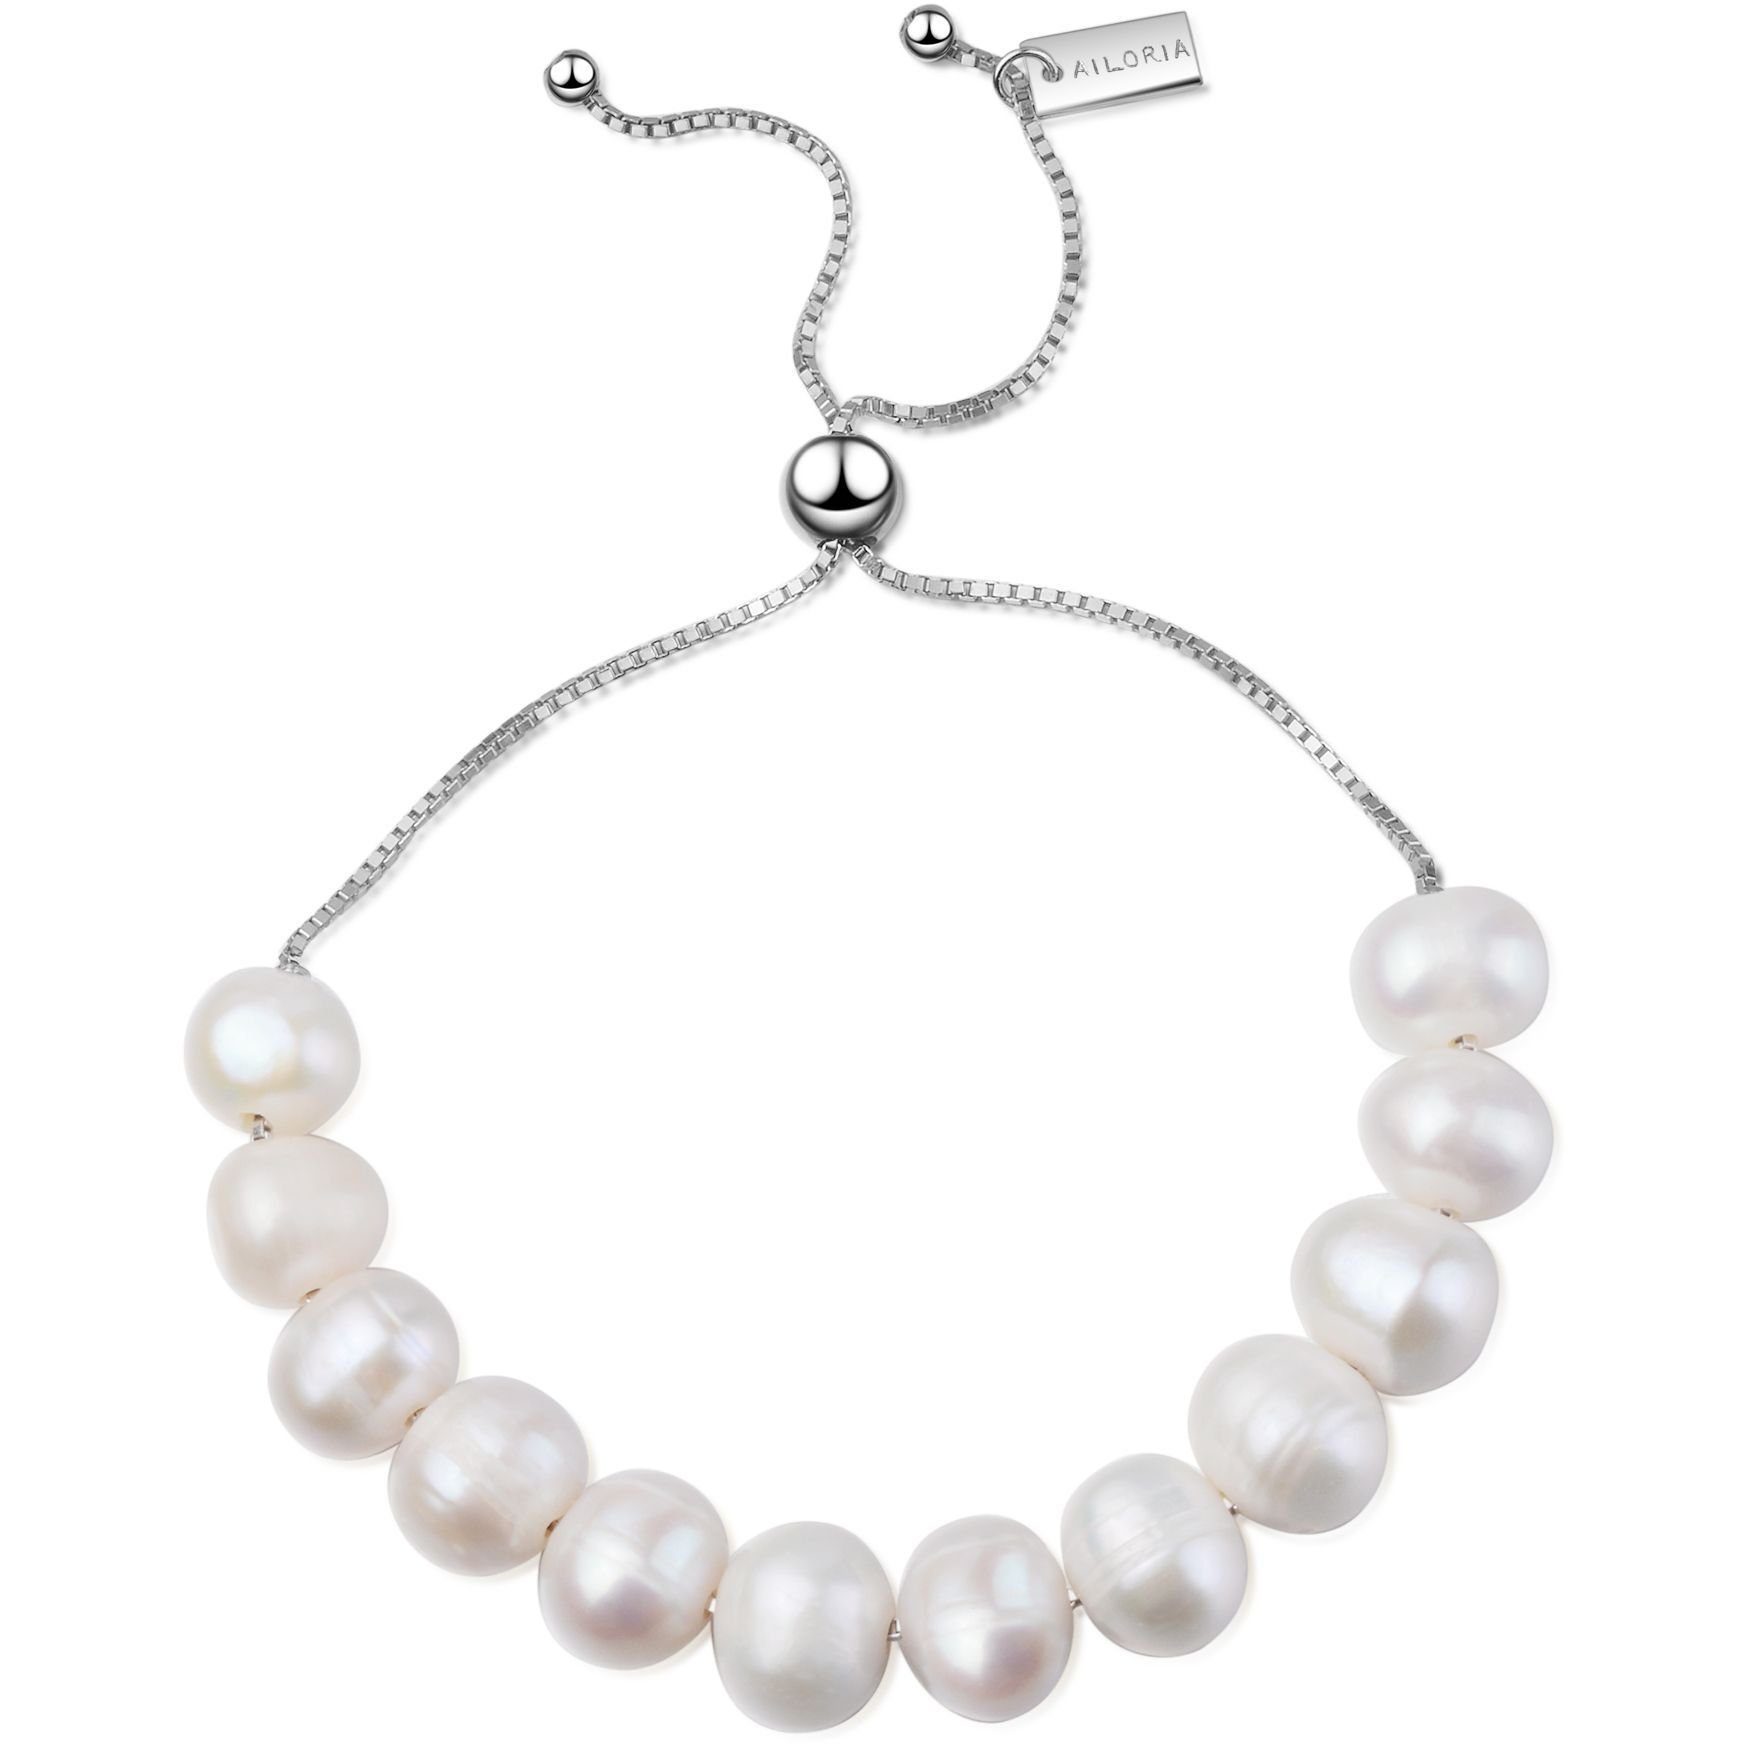 AILORIA Armband MICHIRU armband silber/weiße perle, Armband Silber/weiße Perle